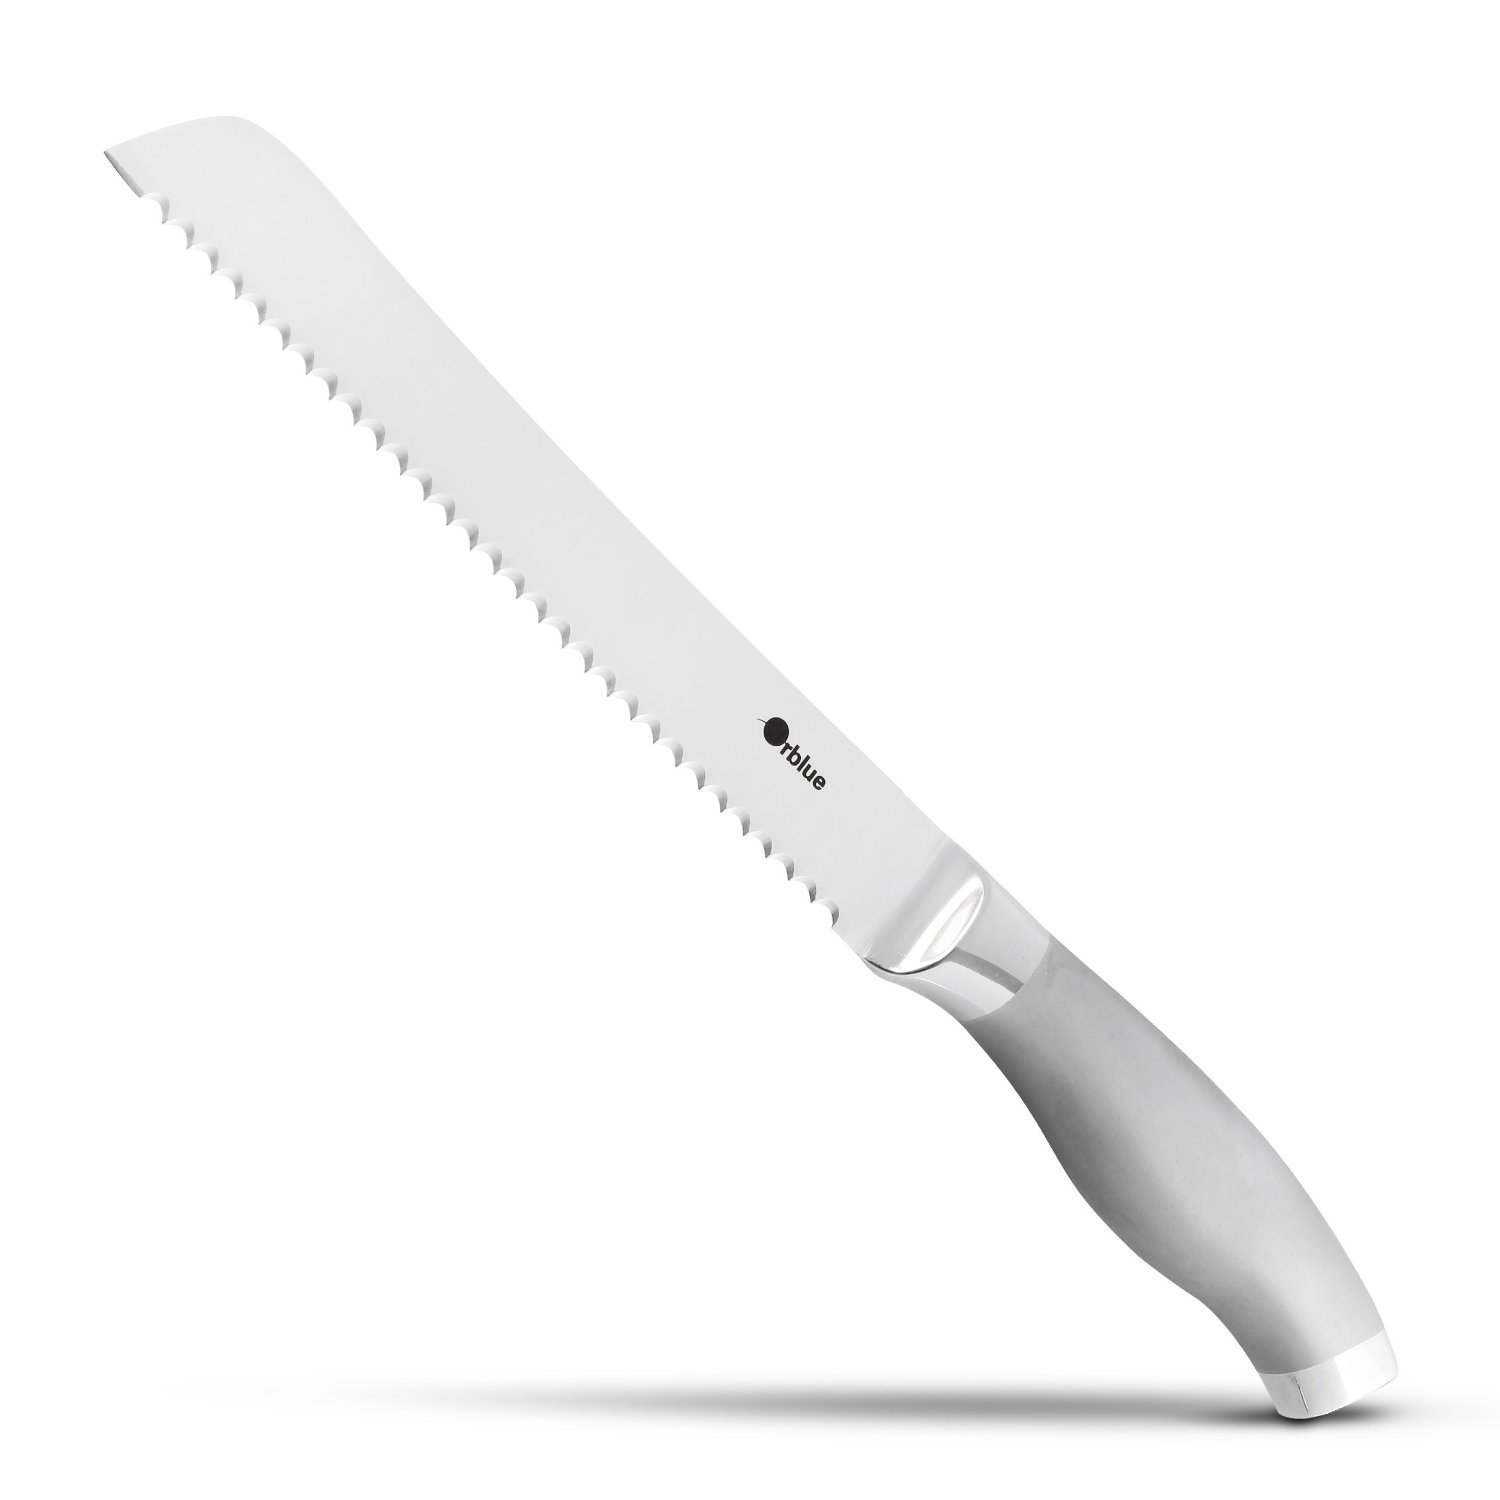 LIGHTNING DEAL ALERT! ORBLUE Stainless Steel Serrated Bread Slicer Knife 48% off!